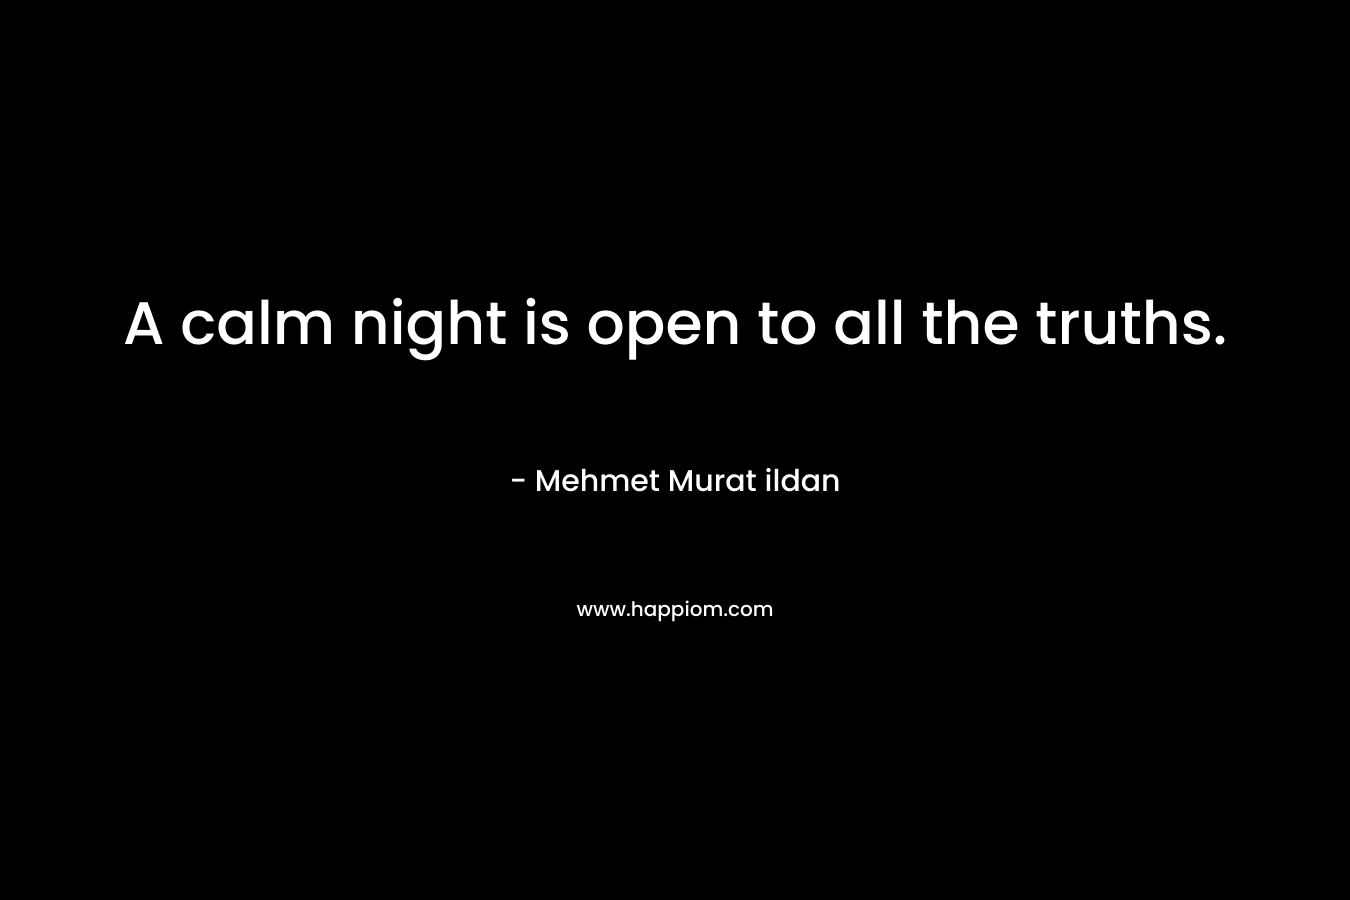 A calm night is open to all the truths. – Mehmet Murat ildan